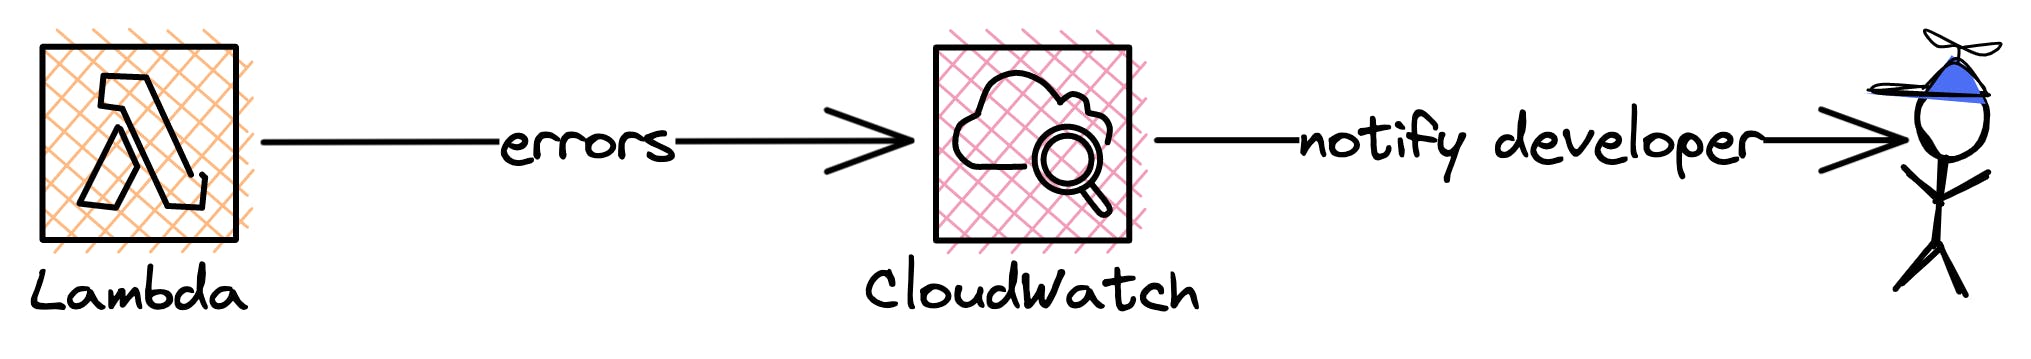 CloudWatch notifies a dev if a lambda function reaches a certain threshold